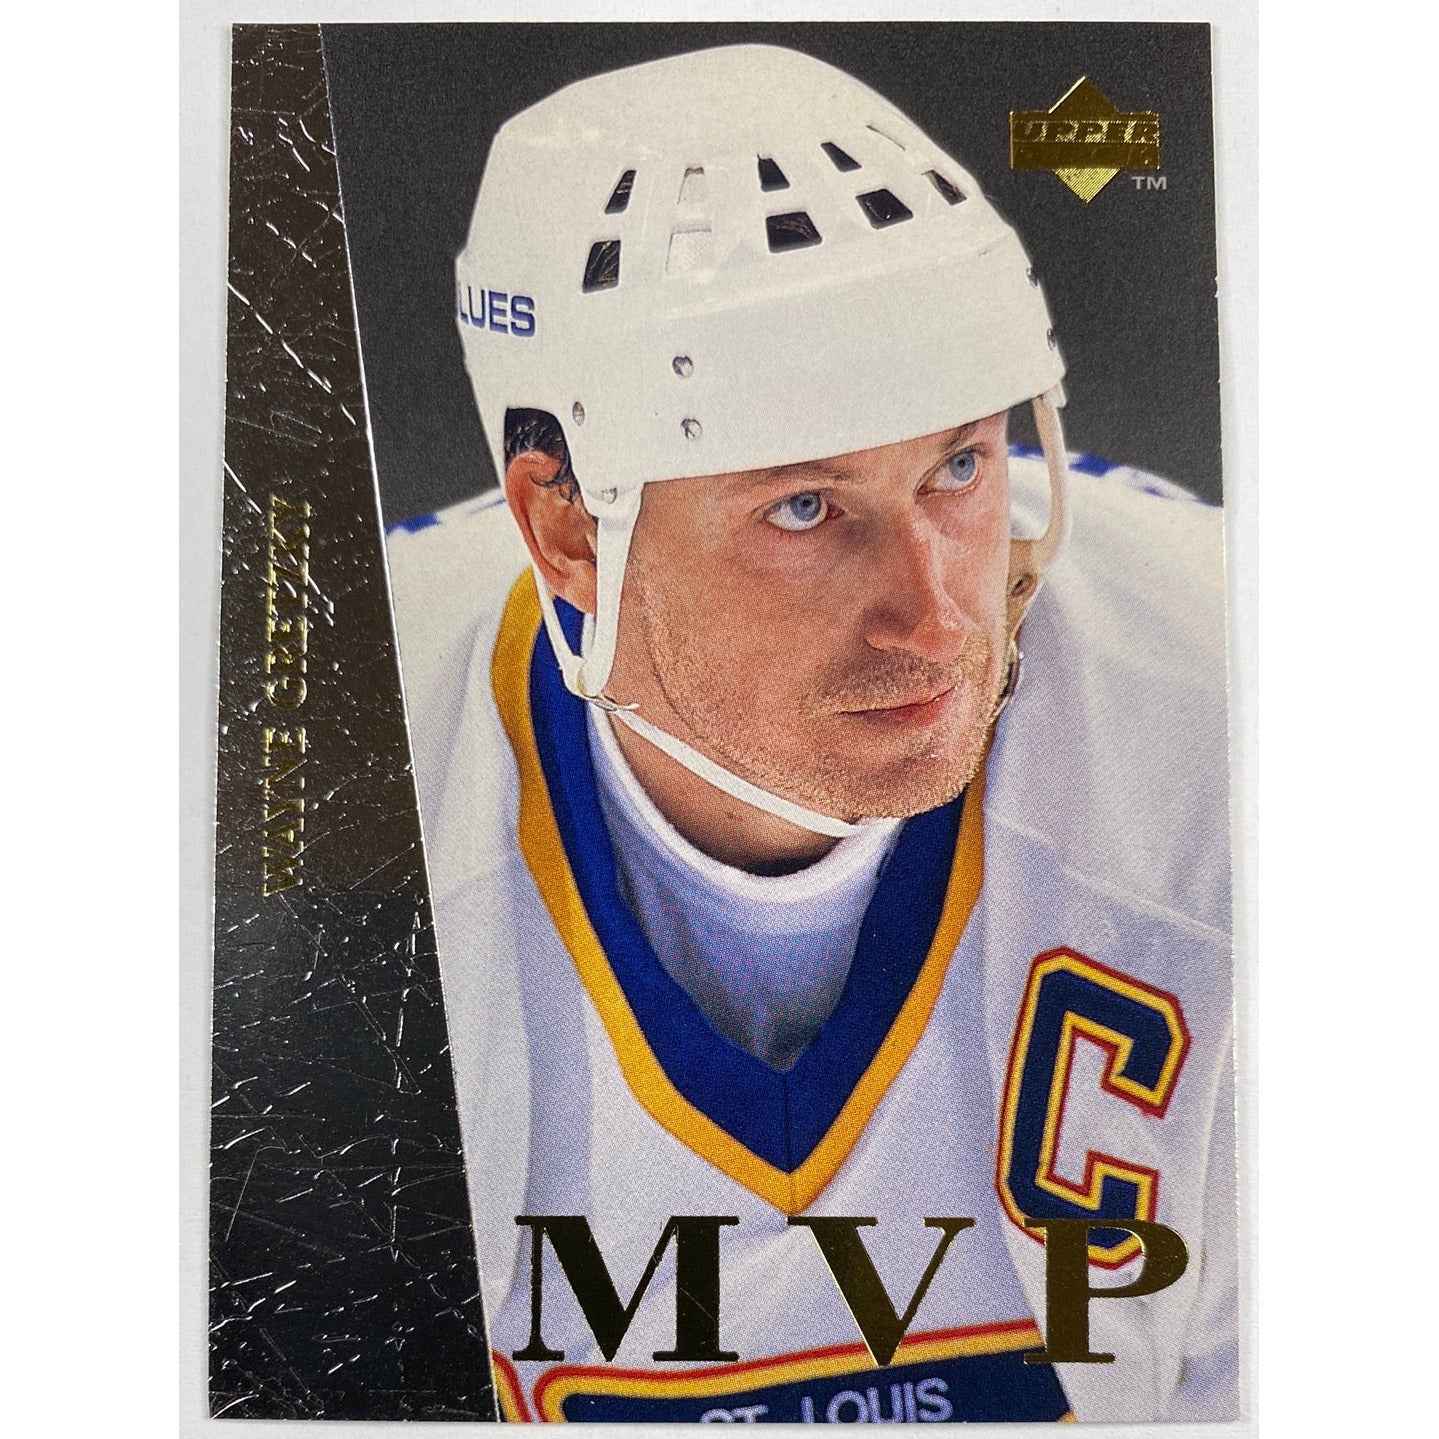 1996-97 Upper Deck Wayne Gretzky